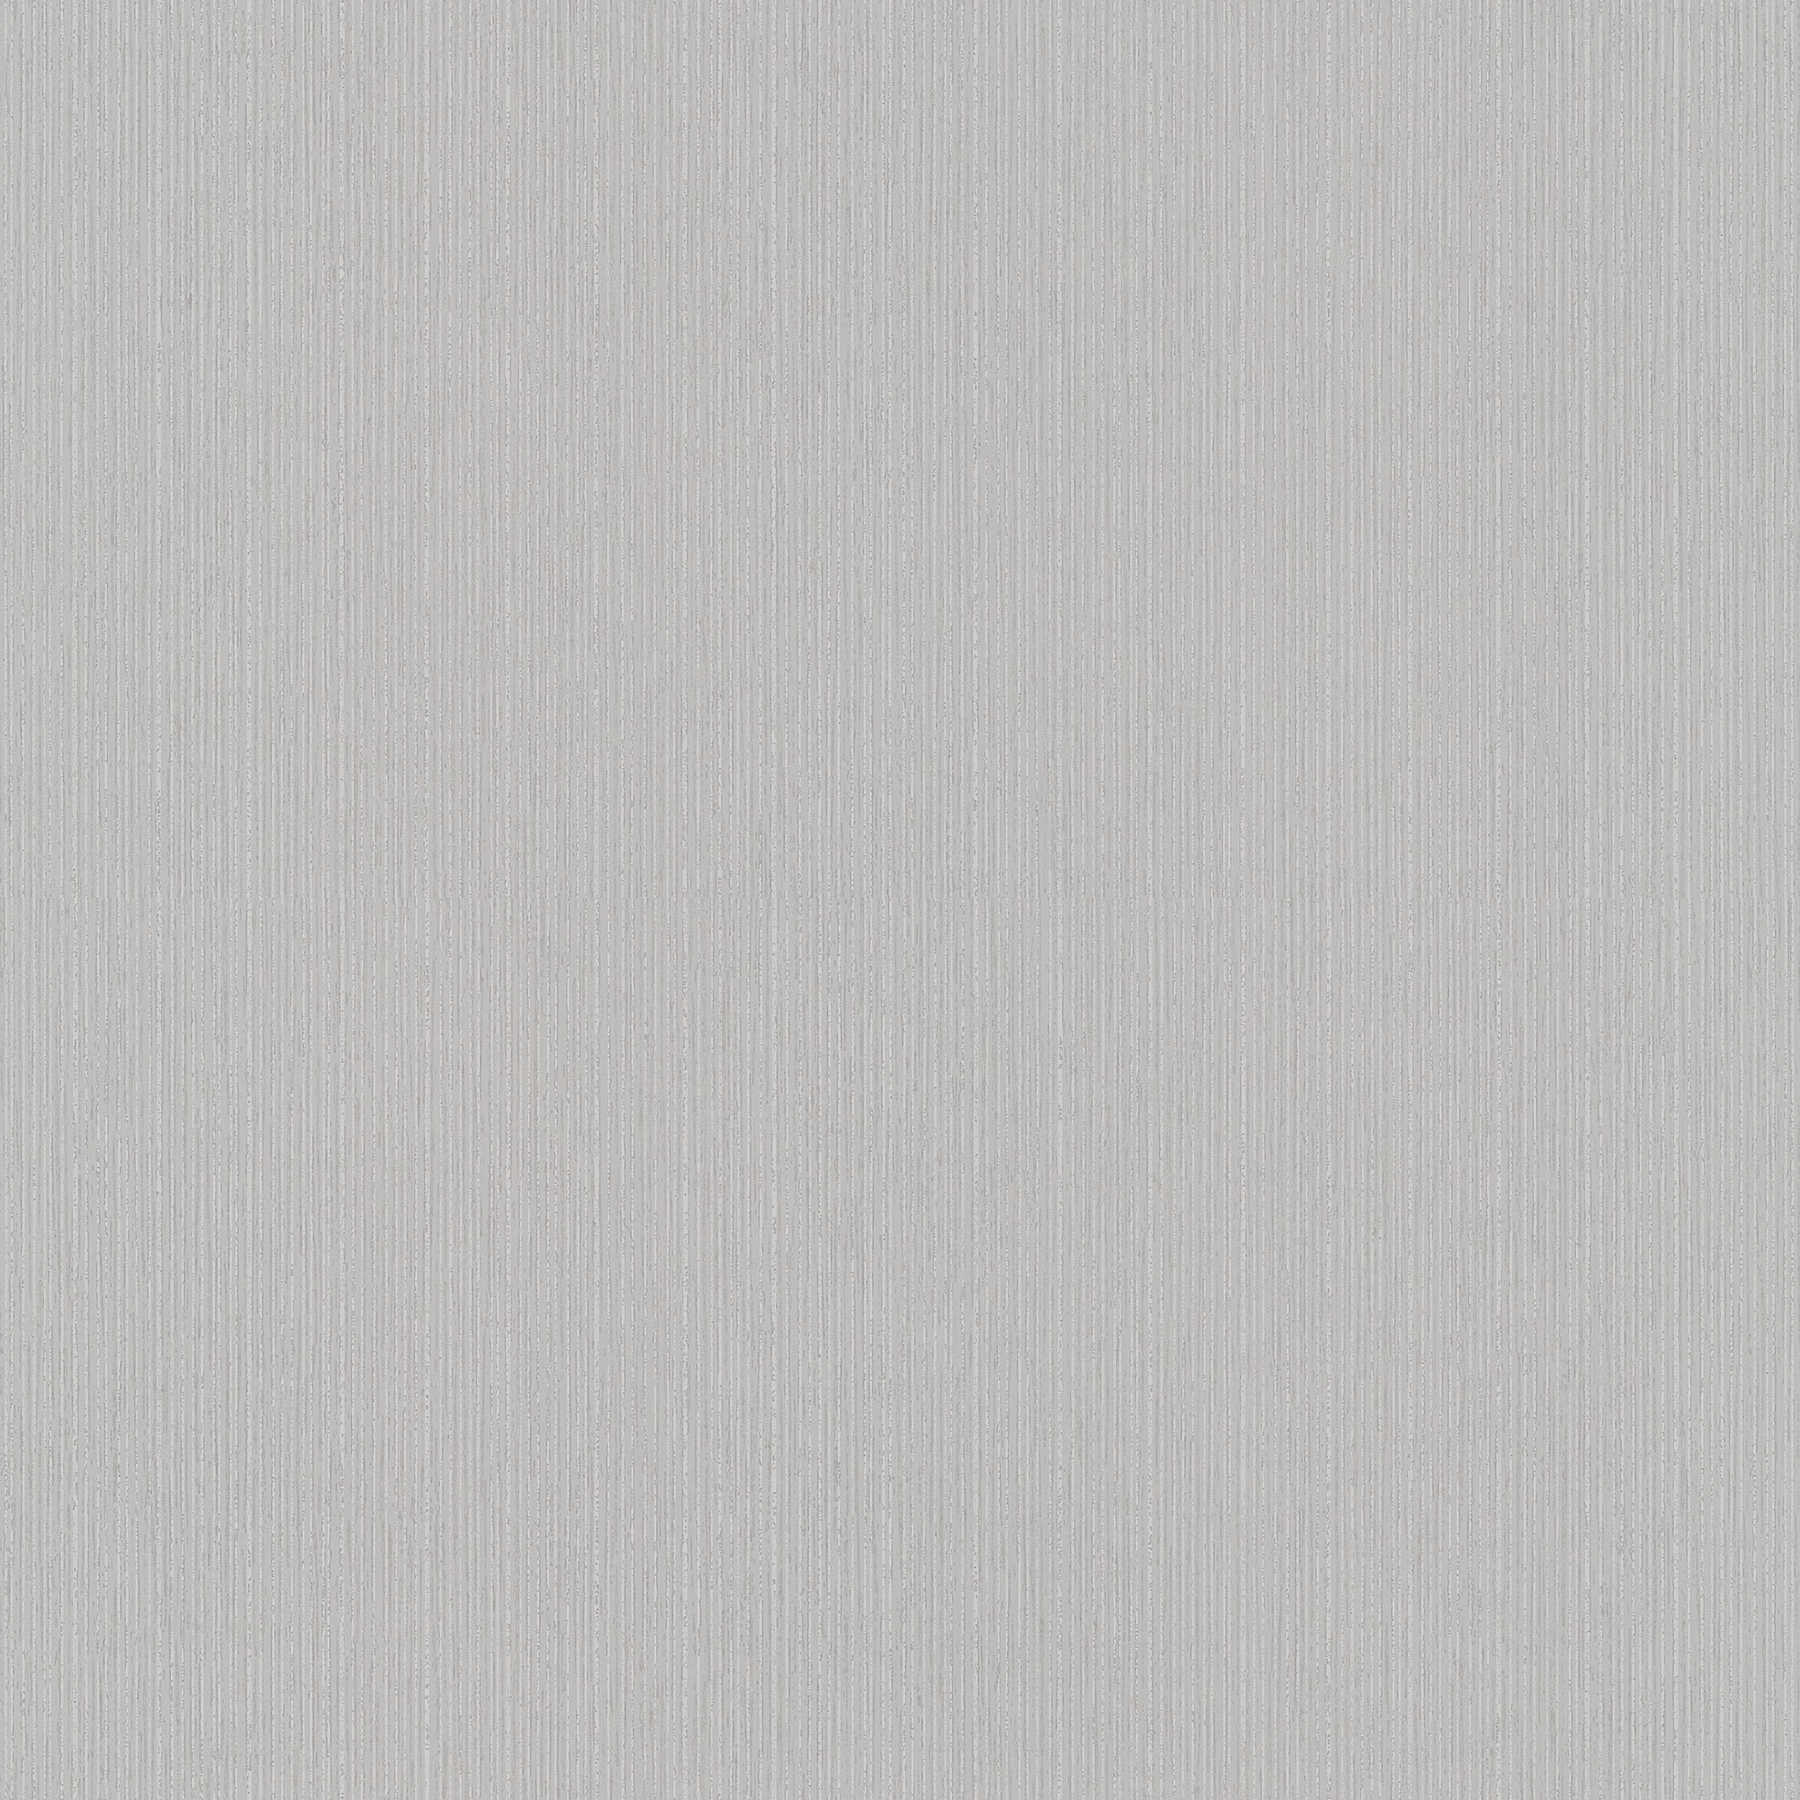 Concrete grey non-woven wallpaper plain with line texture effect
